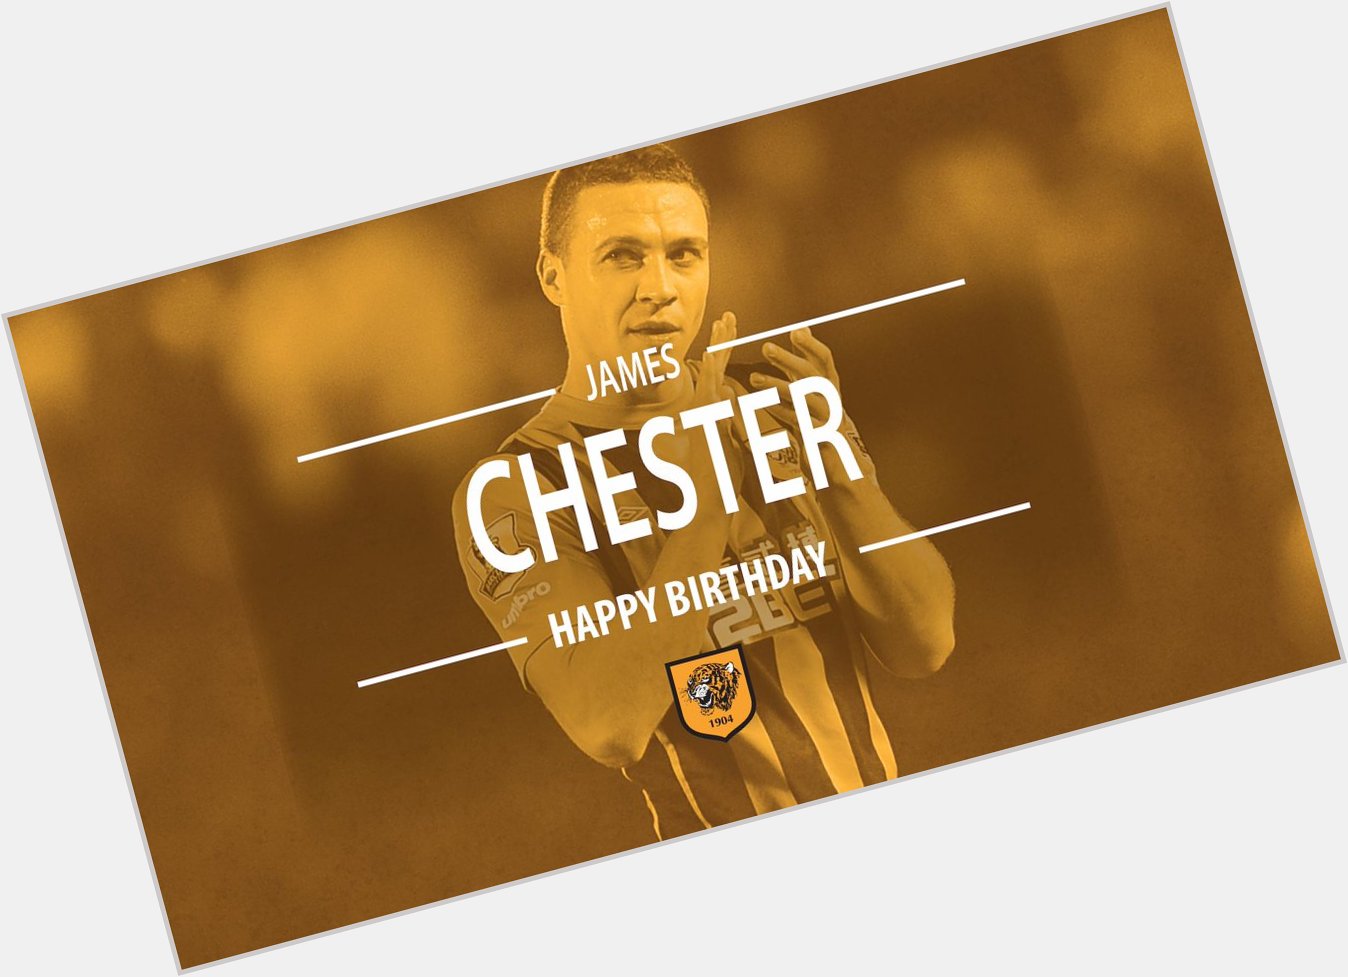 HAPPY BIRTHDAY: James Chester celebrates his 26th birthday today! 